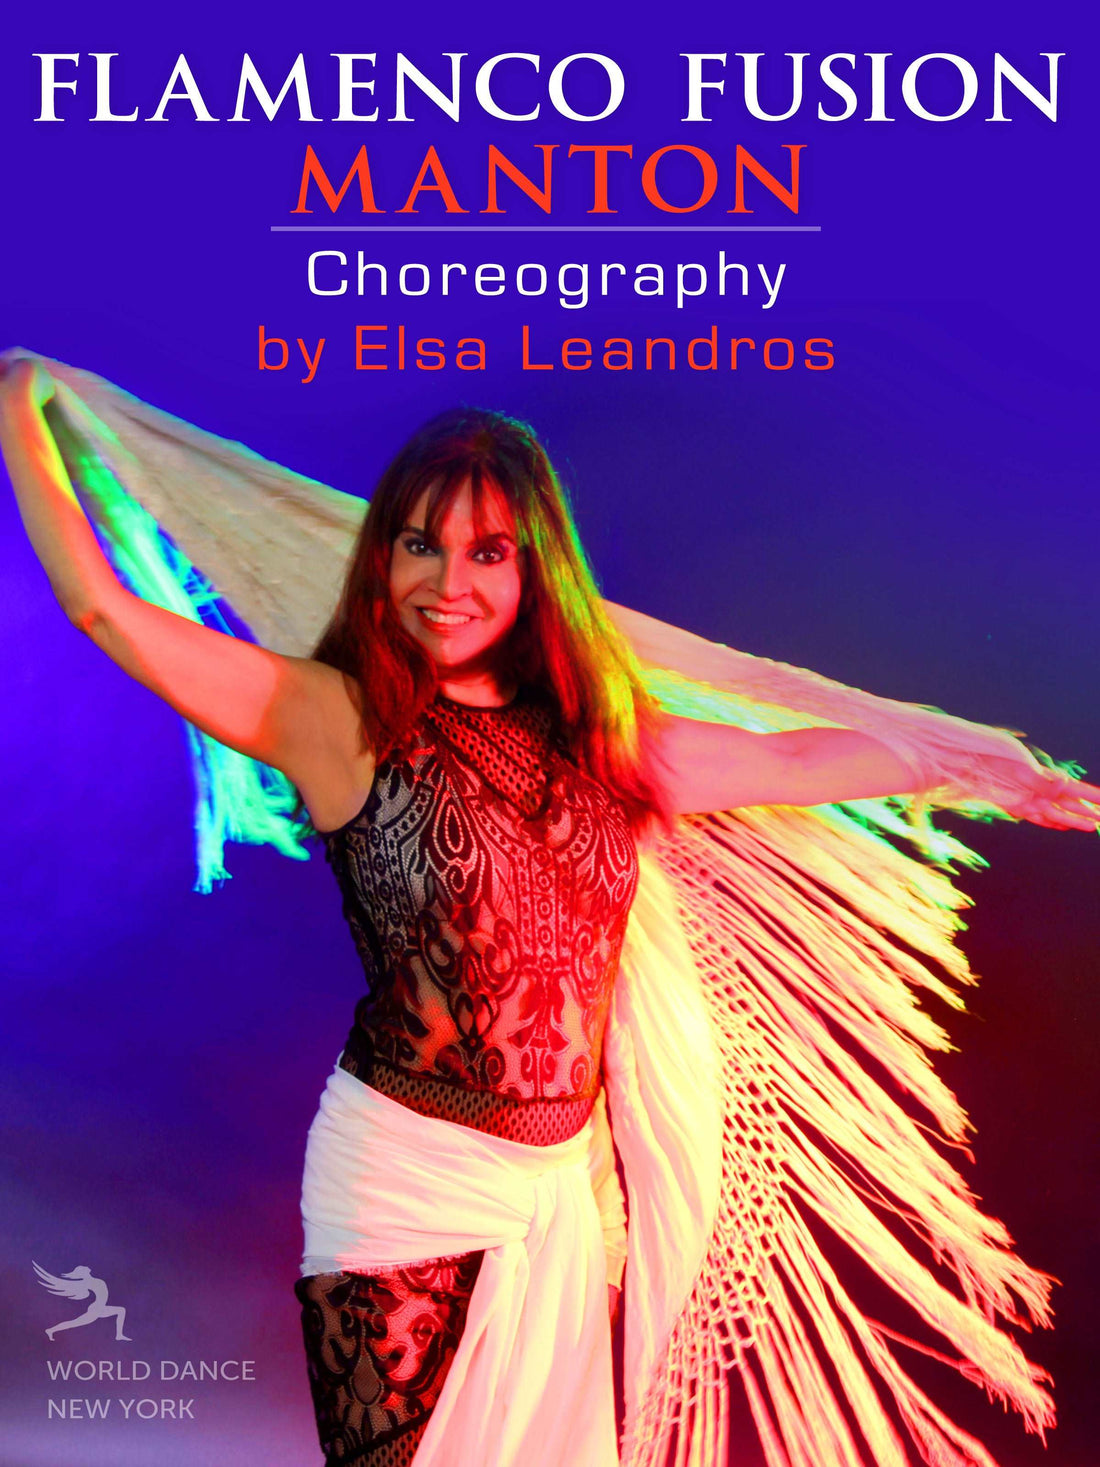 Flamenco Fusion Manton Choreography by Elsa Leandros - World Dance New York